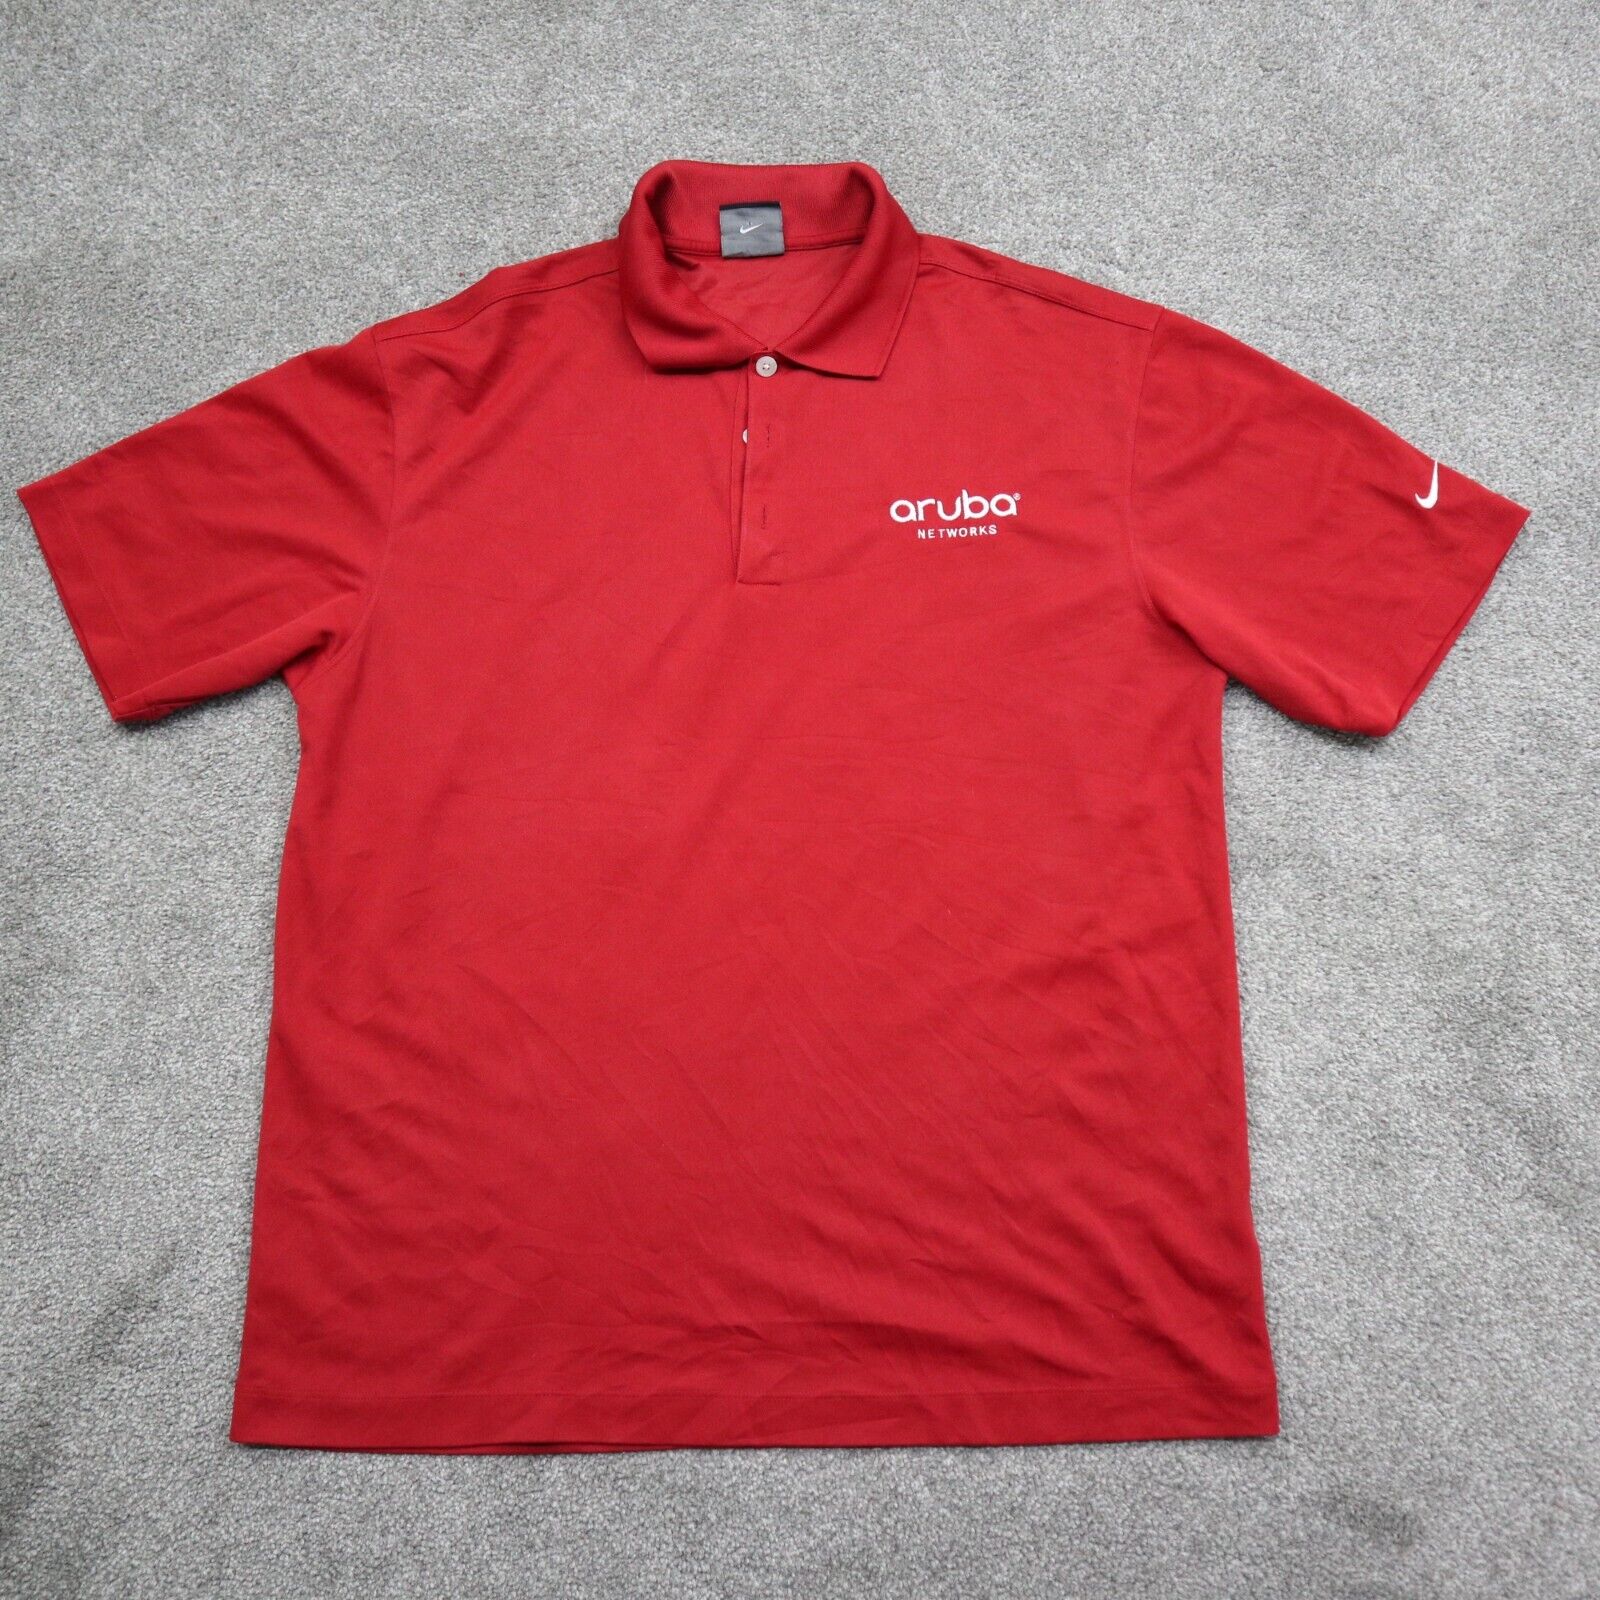 Nike St Louis Cardinals Shirt Medium Red Dri-Fit Polo Striped Men's Golf